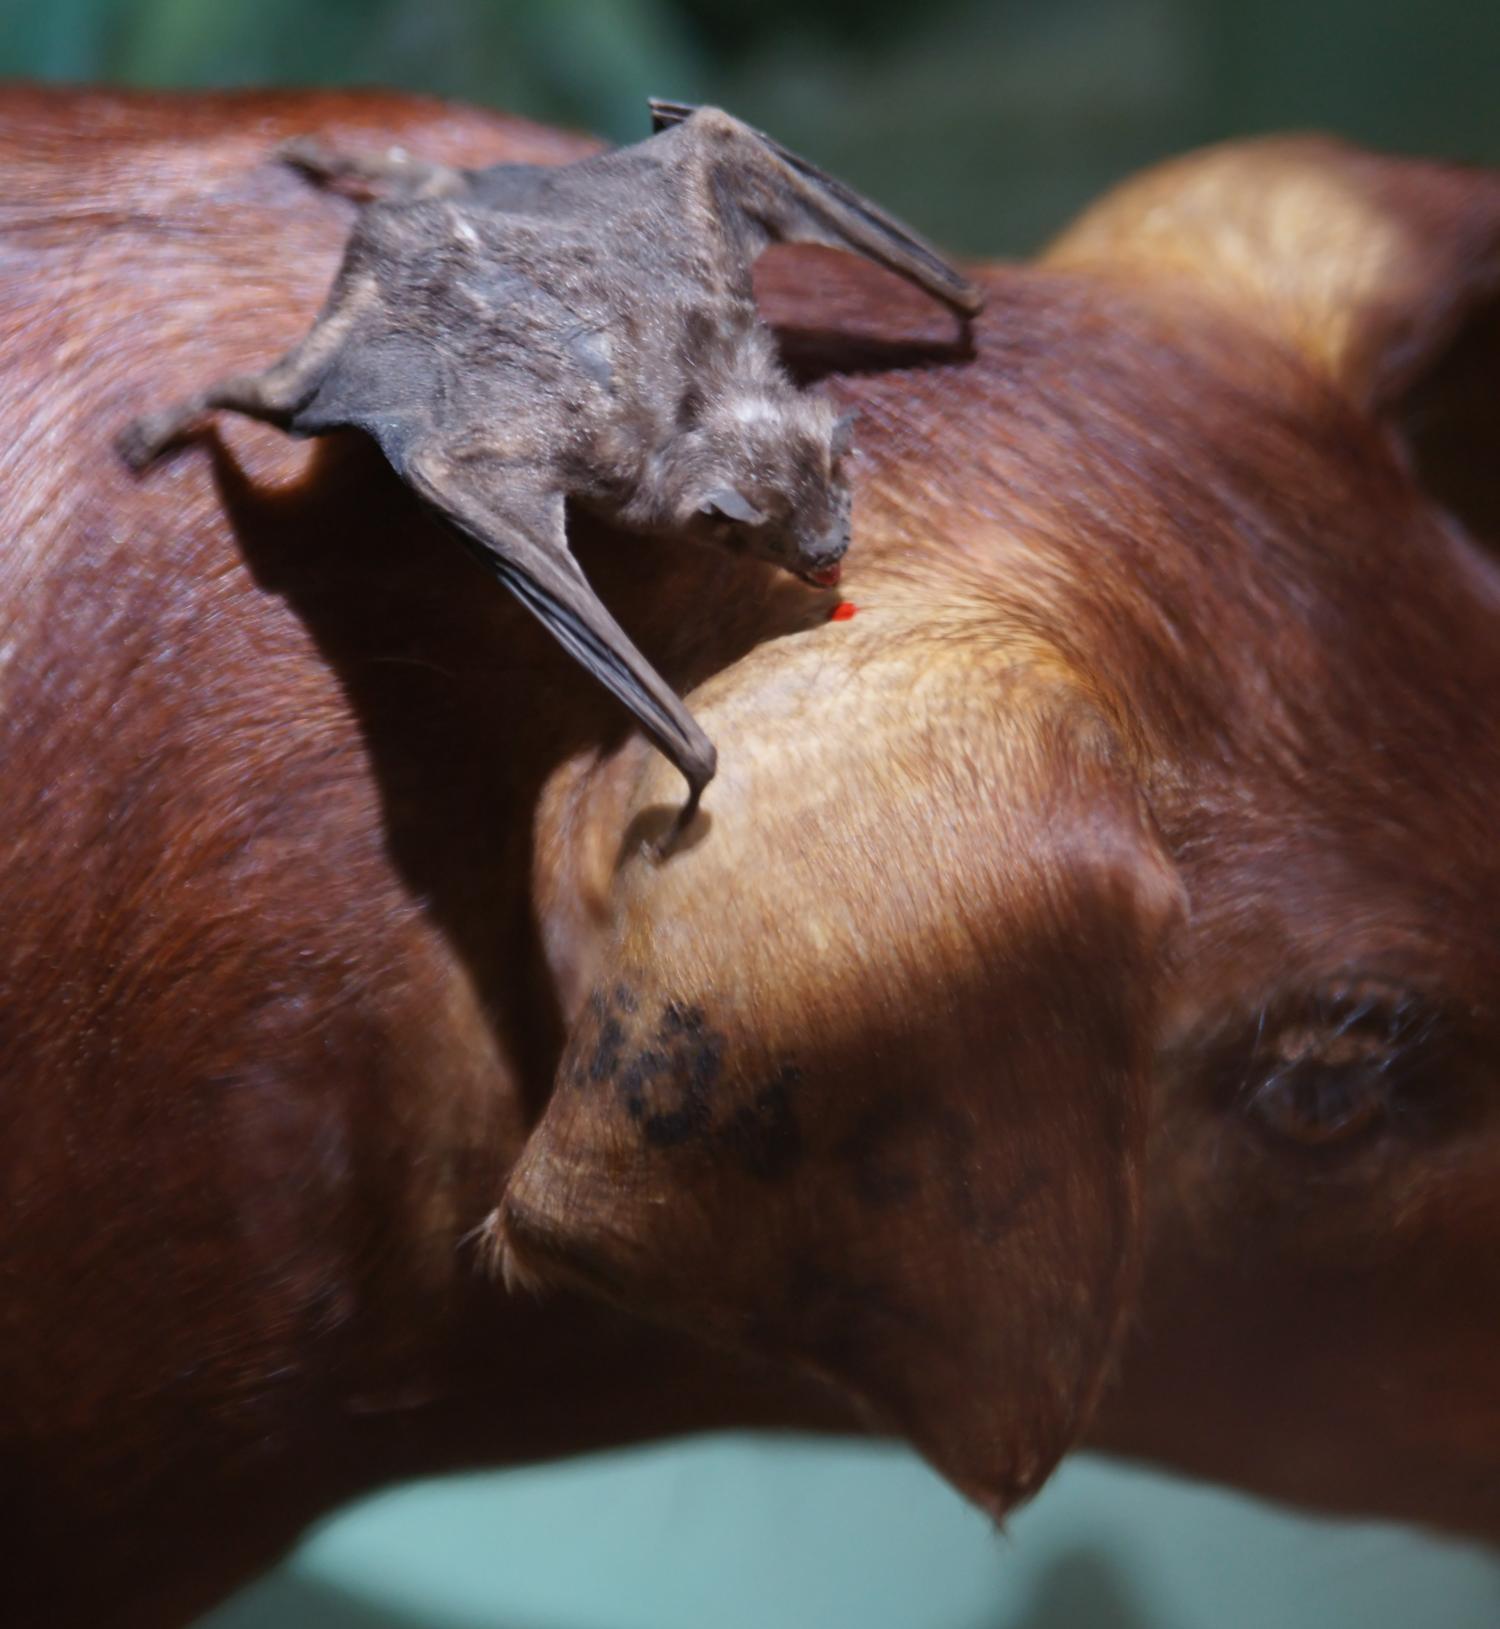 Like college roommates, vampire bats bond when randomly paired